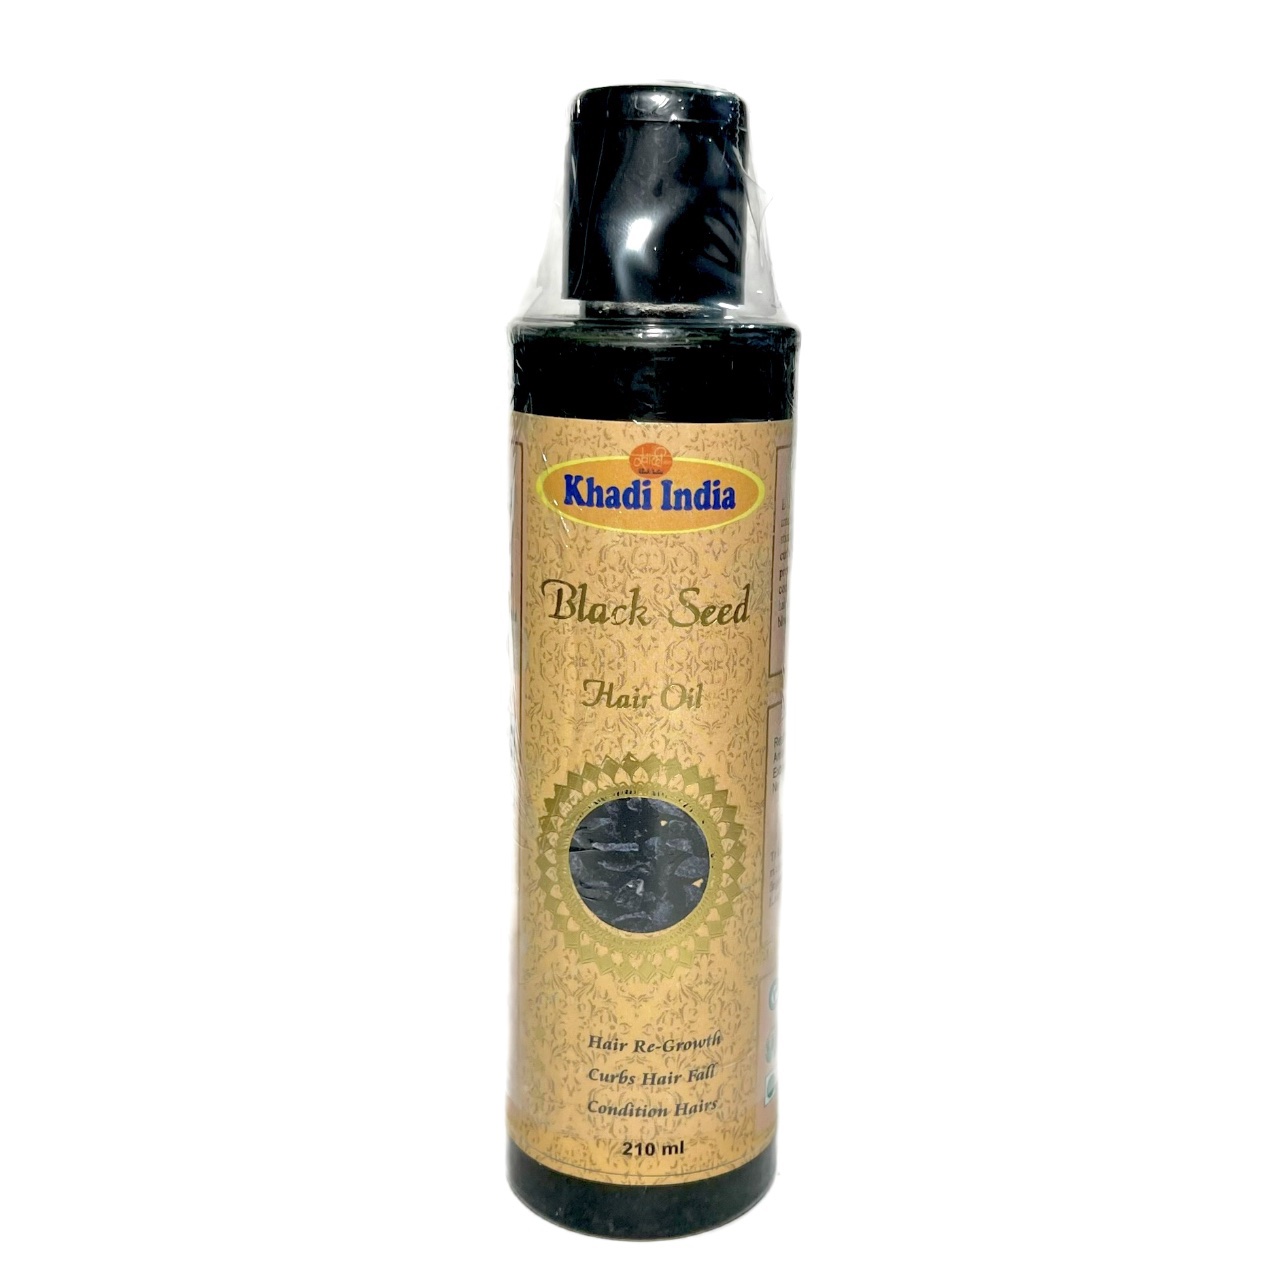 BLACK SEED Hair Oil, Khadi India (ЧЁРНЫЙ ТМИН, Масло от выпадения и для роста волос, Кхади Индия), 210 мл.